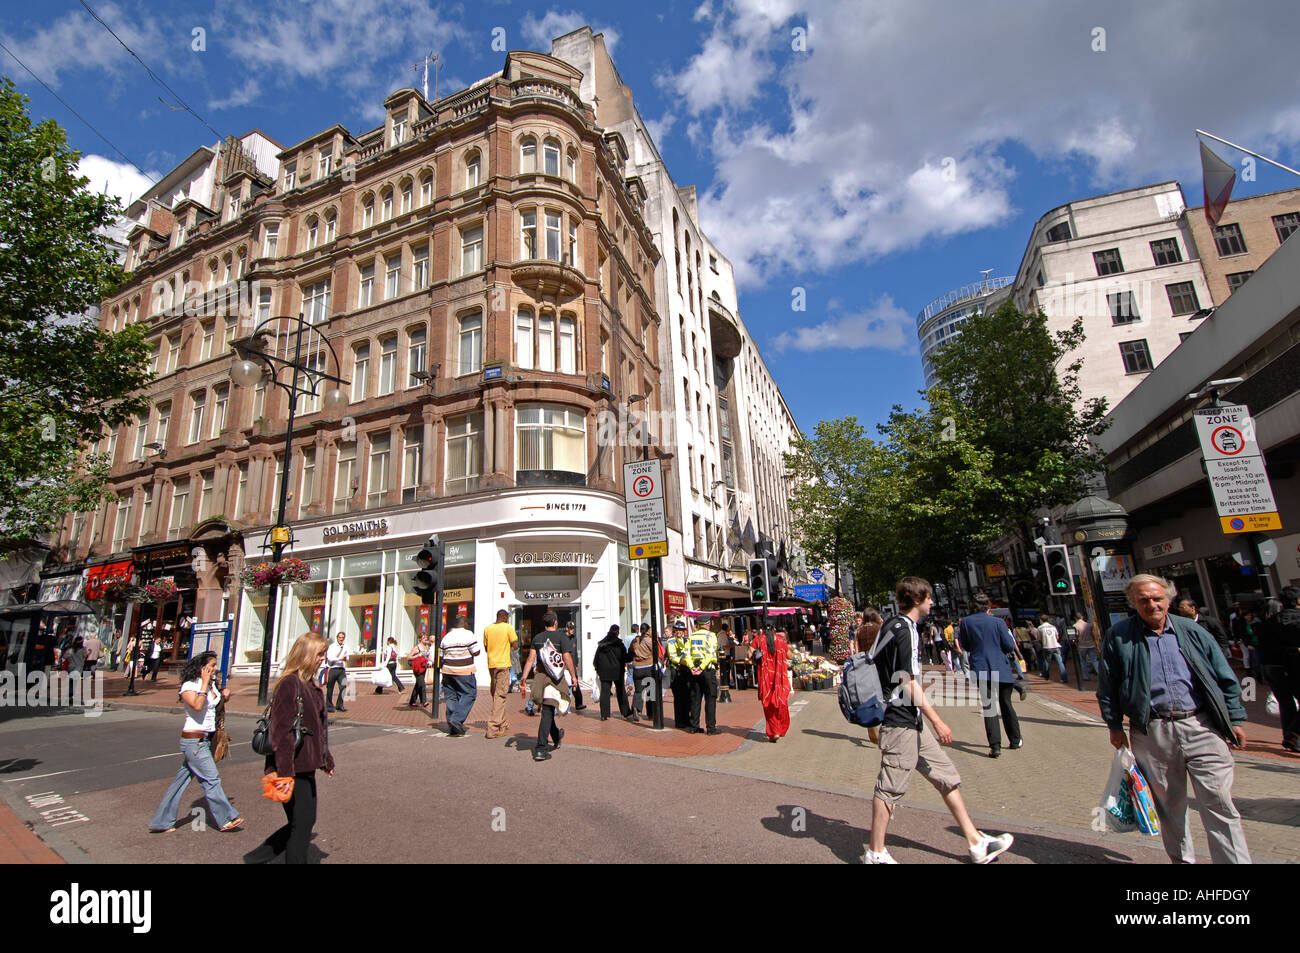 Birmingham City Centre street scene. New St. corner of Corporation St